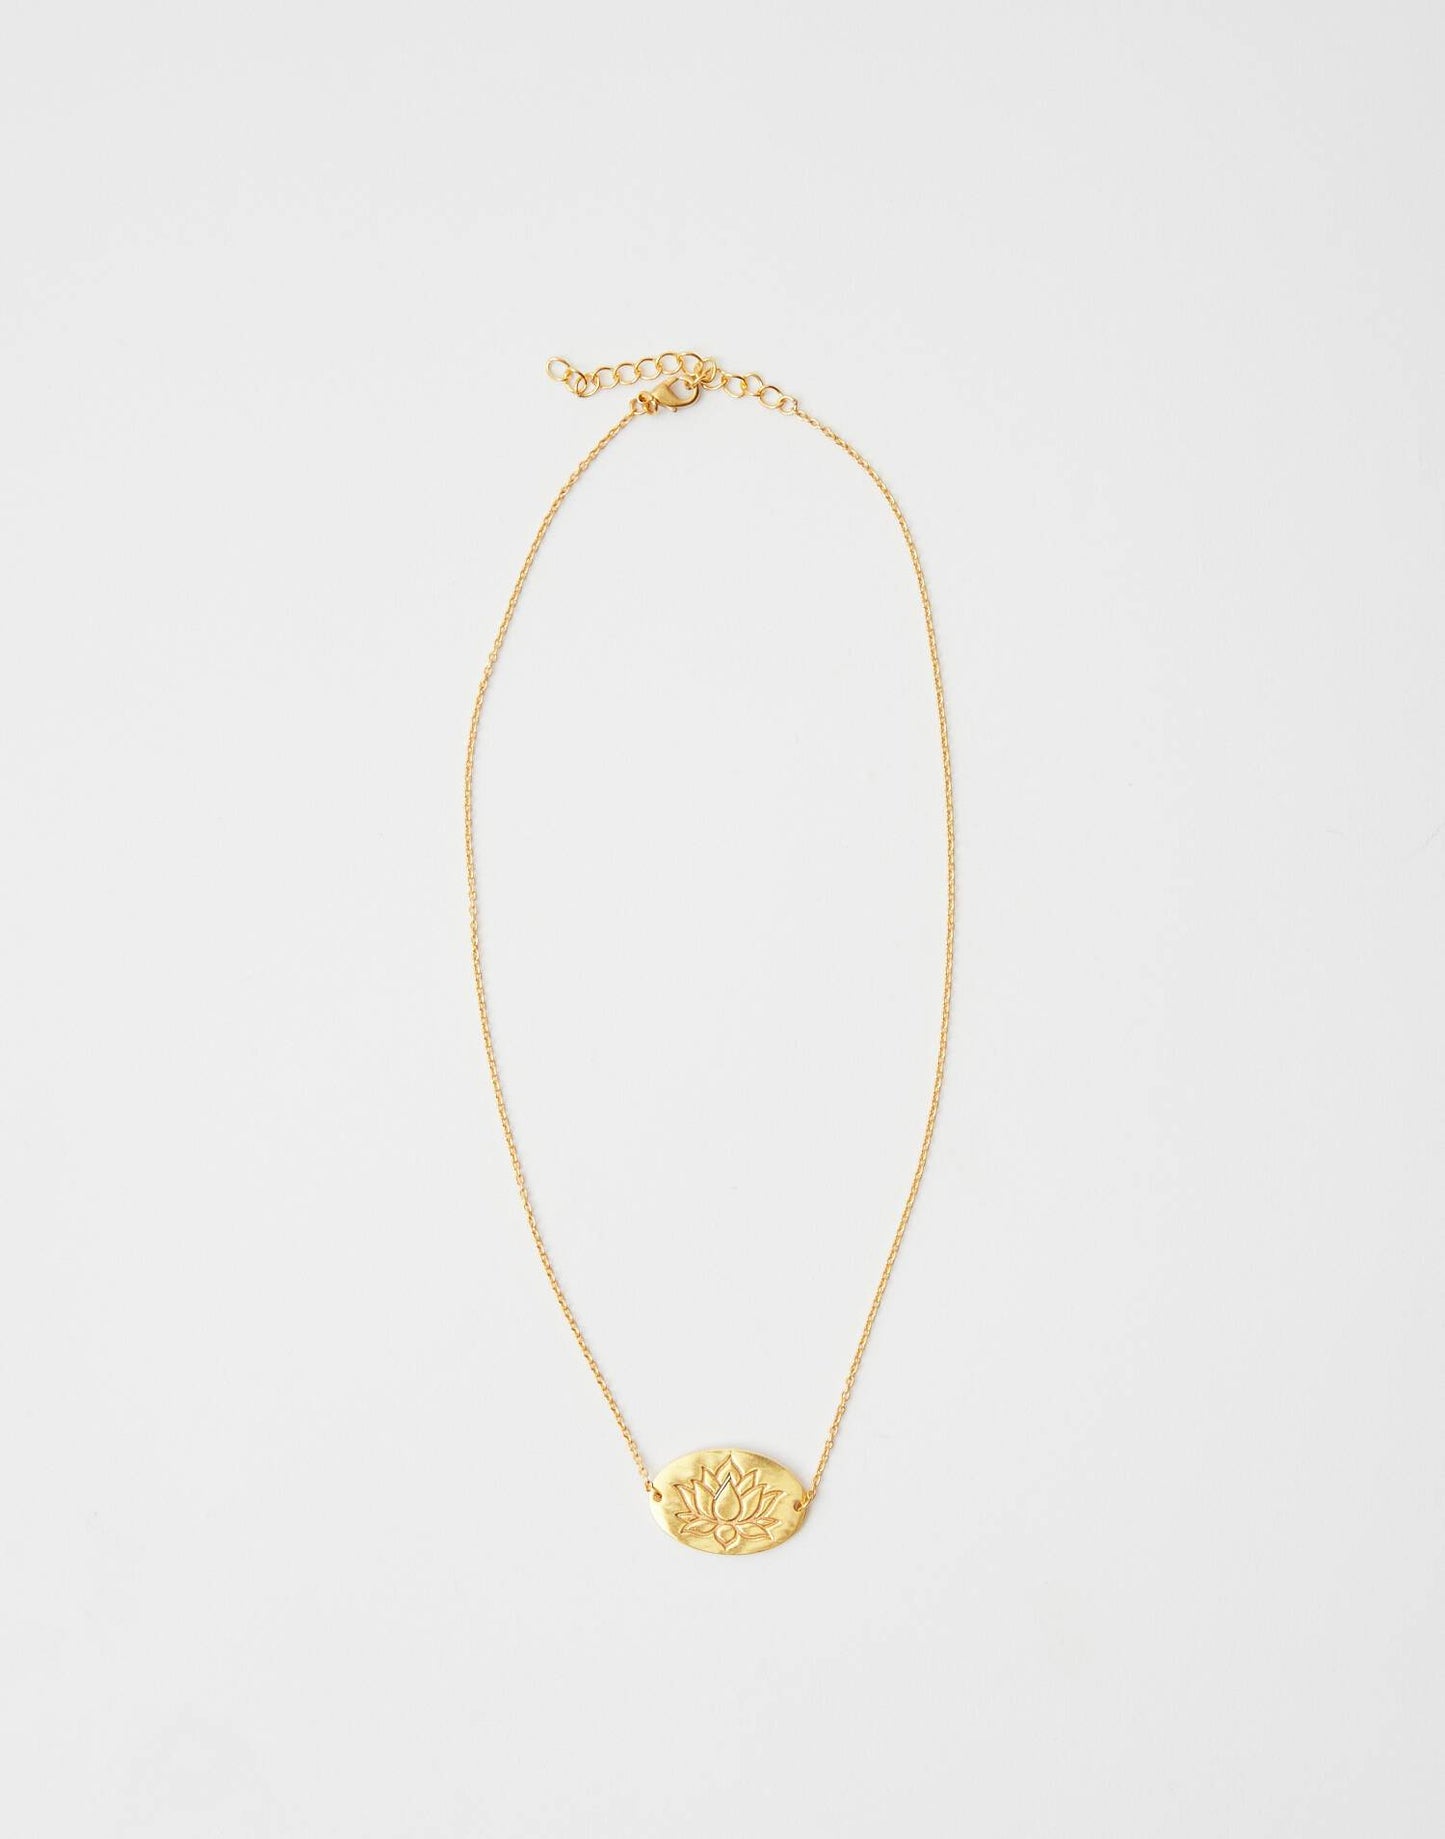 Lotus charm necklace